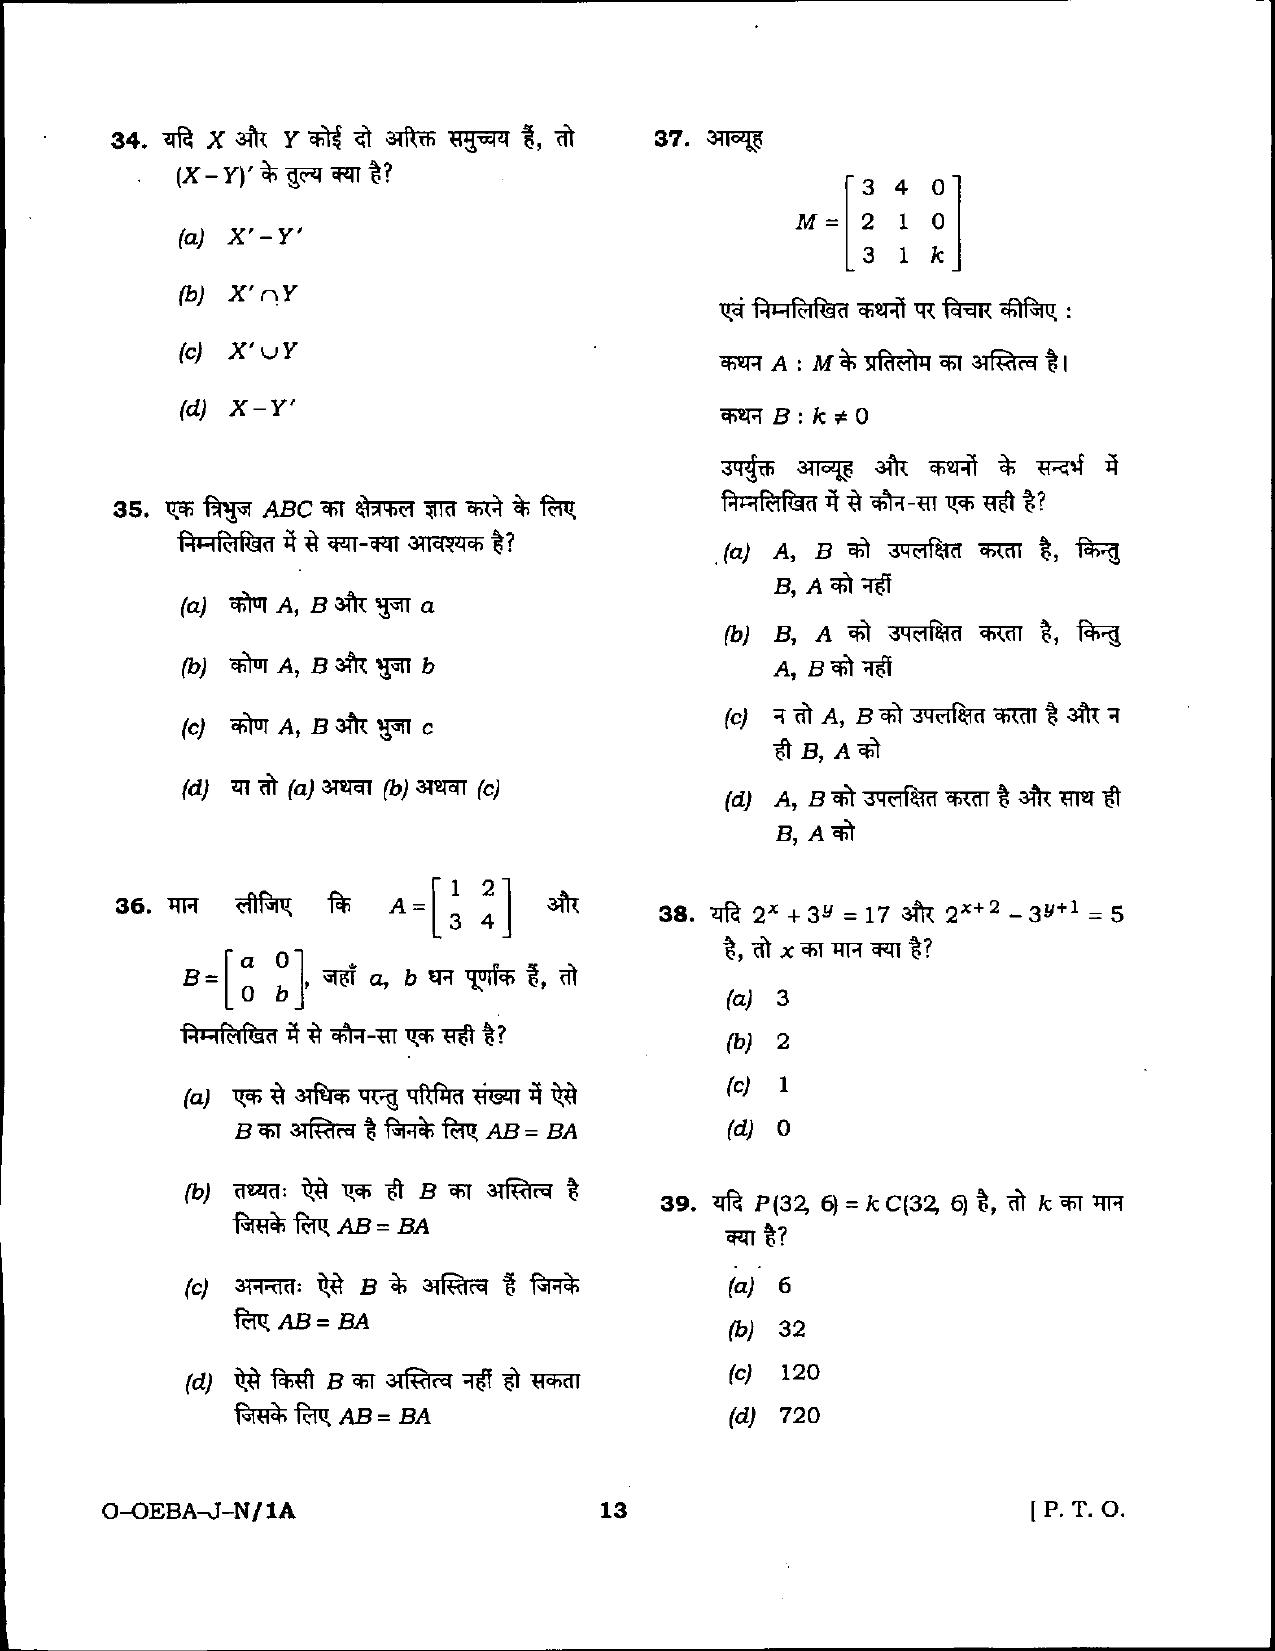 Odisha Junior Clerk Question Paper - General Mathematics - Page 13